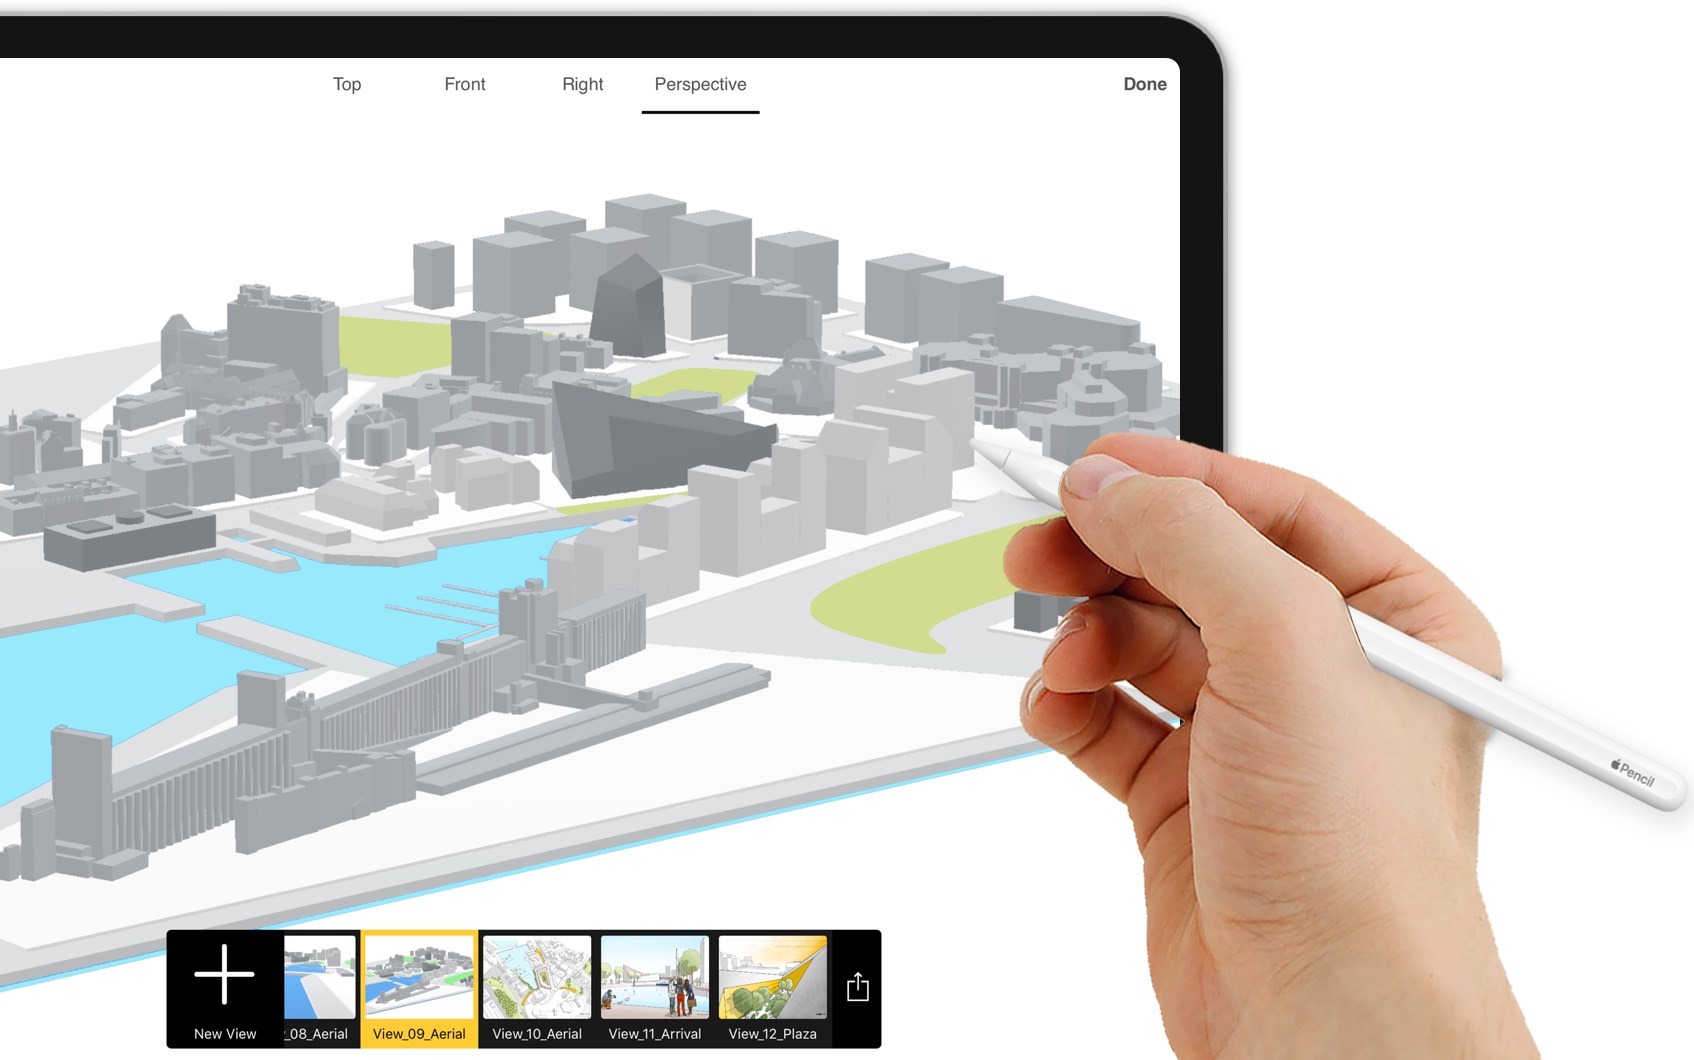 Should Architects Use iPad for Designing?